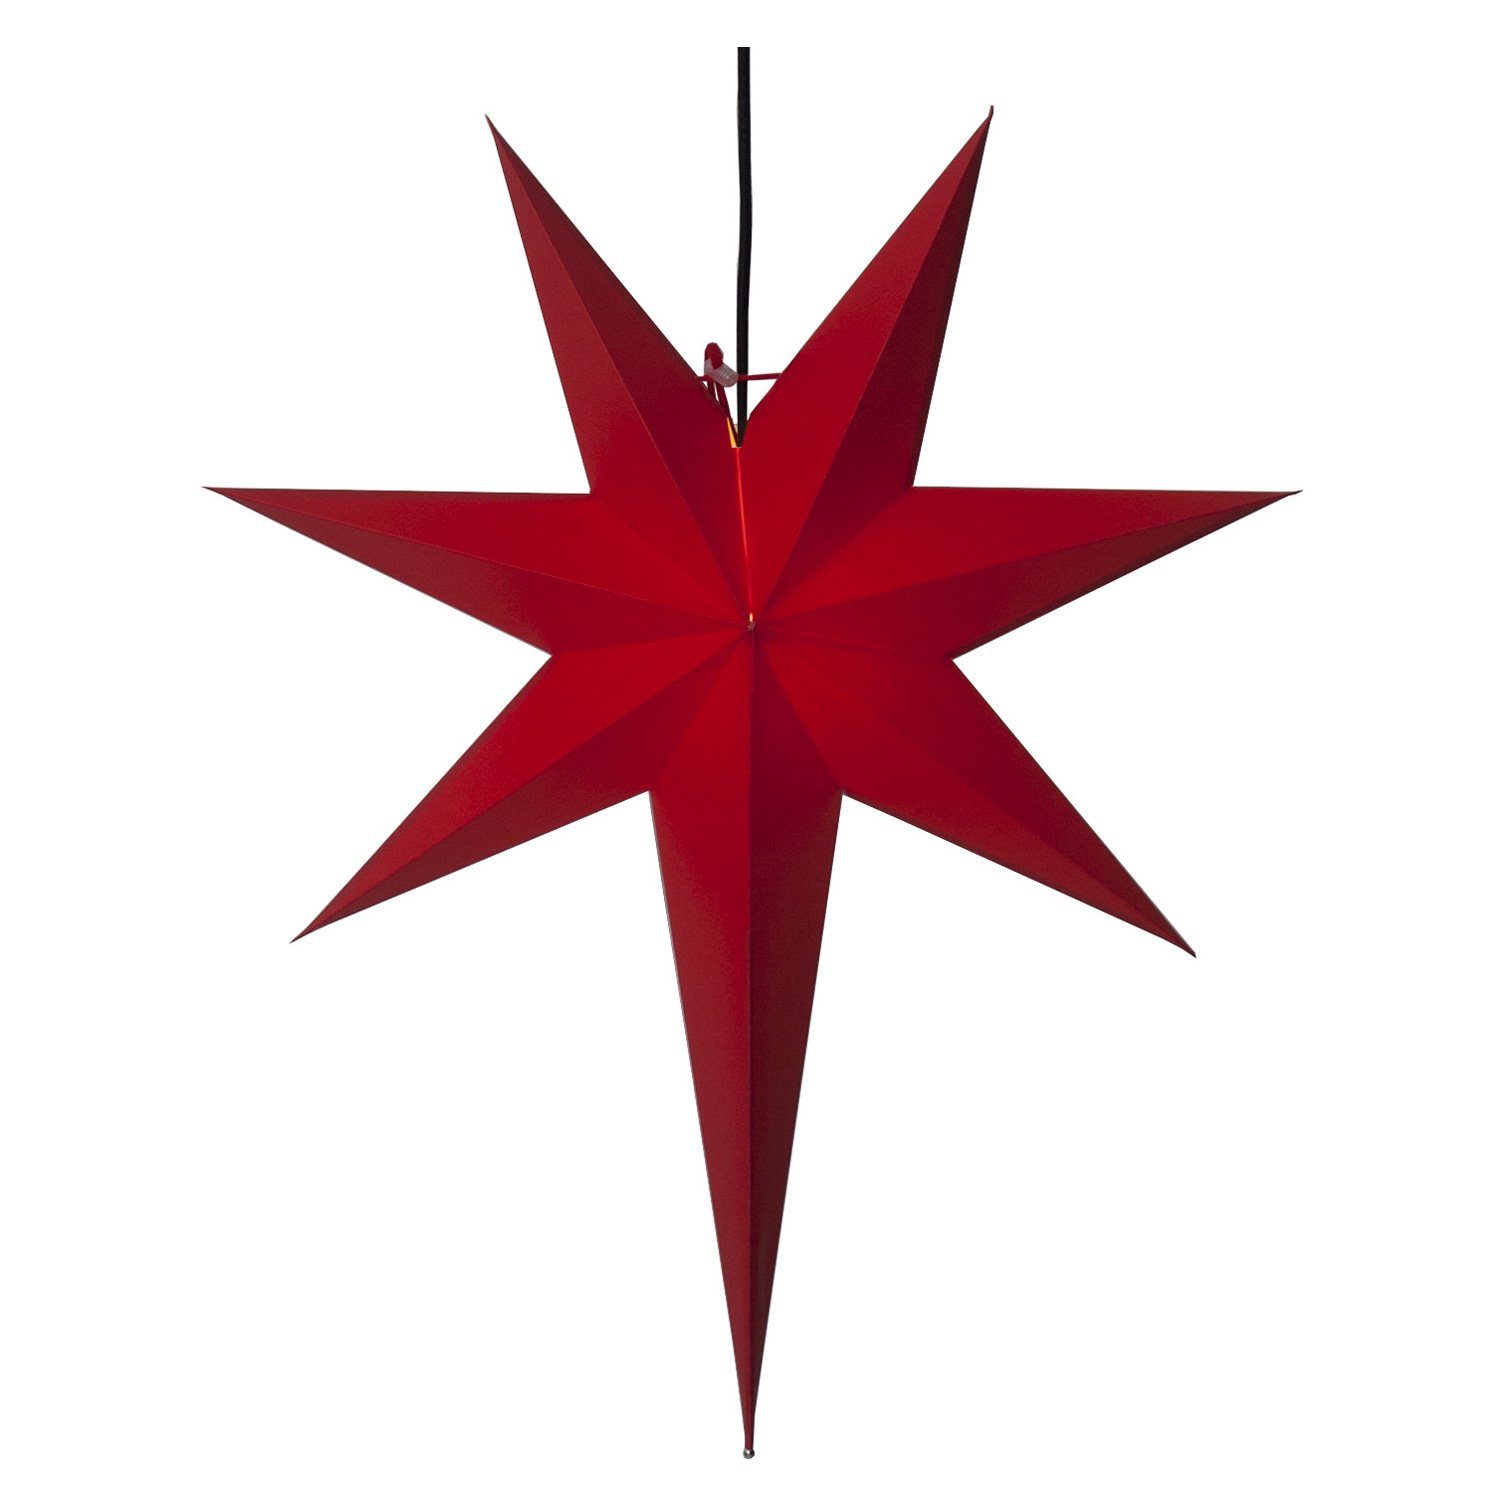 Papierstern 7-zackig TRADING Leuchtstern STAR hängend Faltstern Stern 55cm rot LED mit Kabel